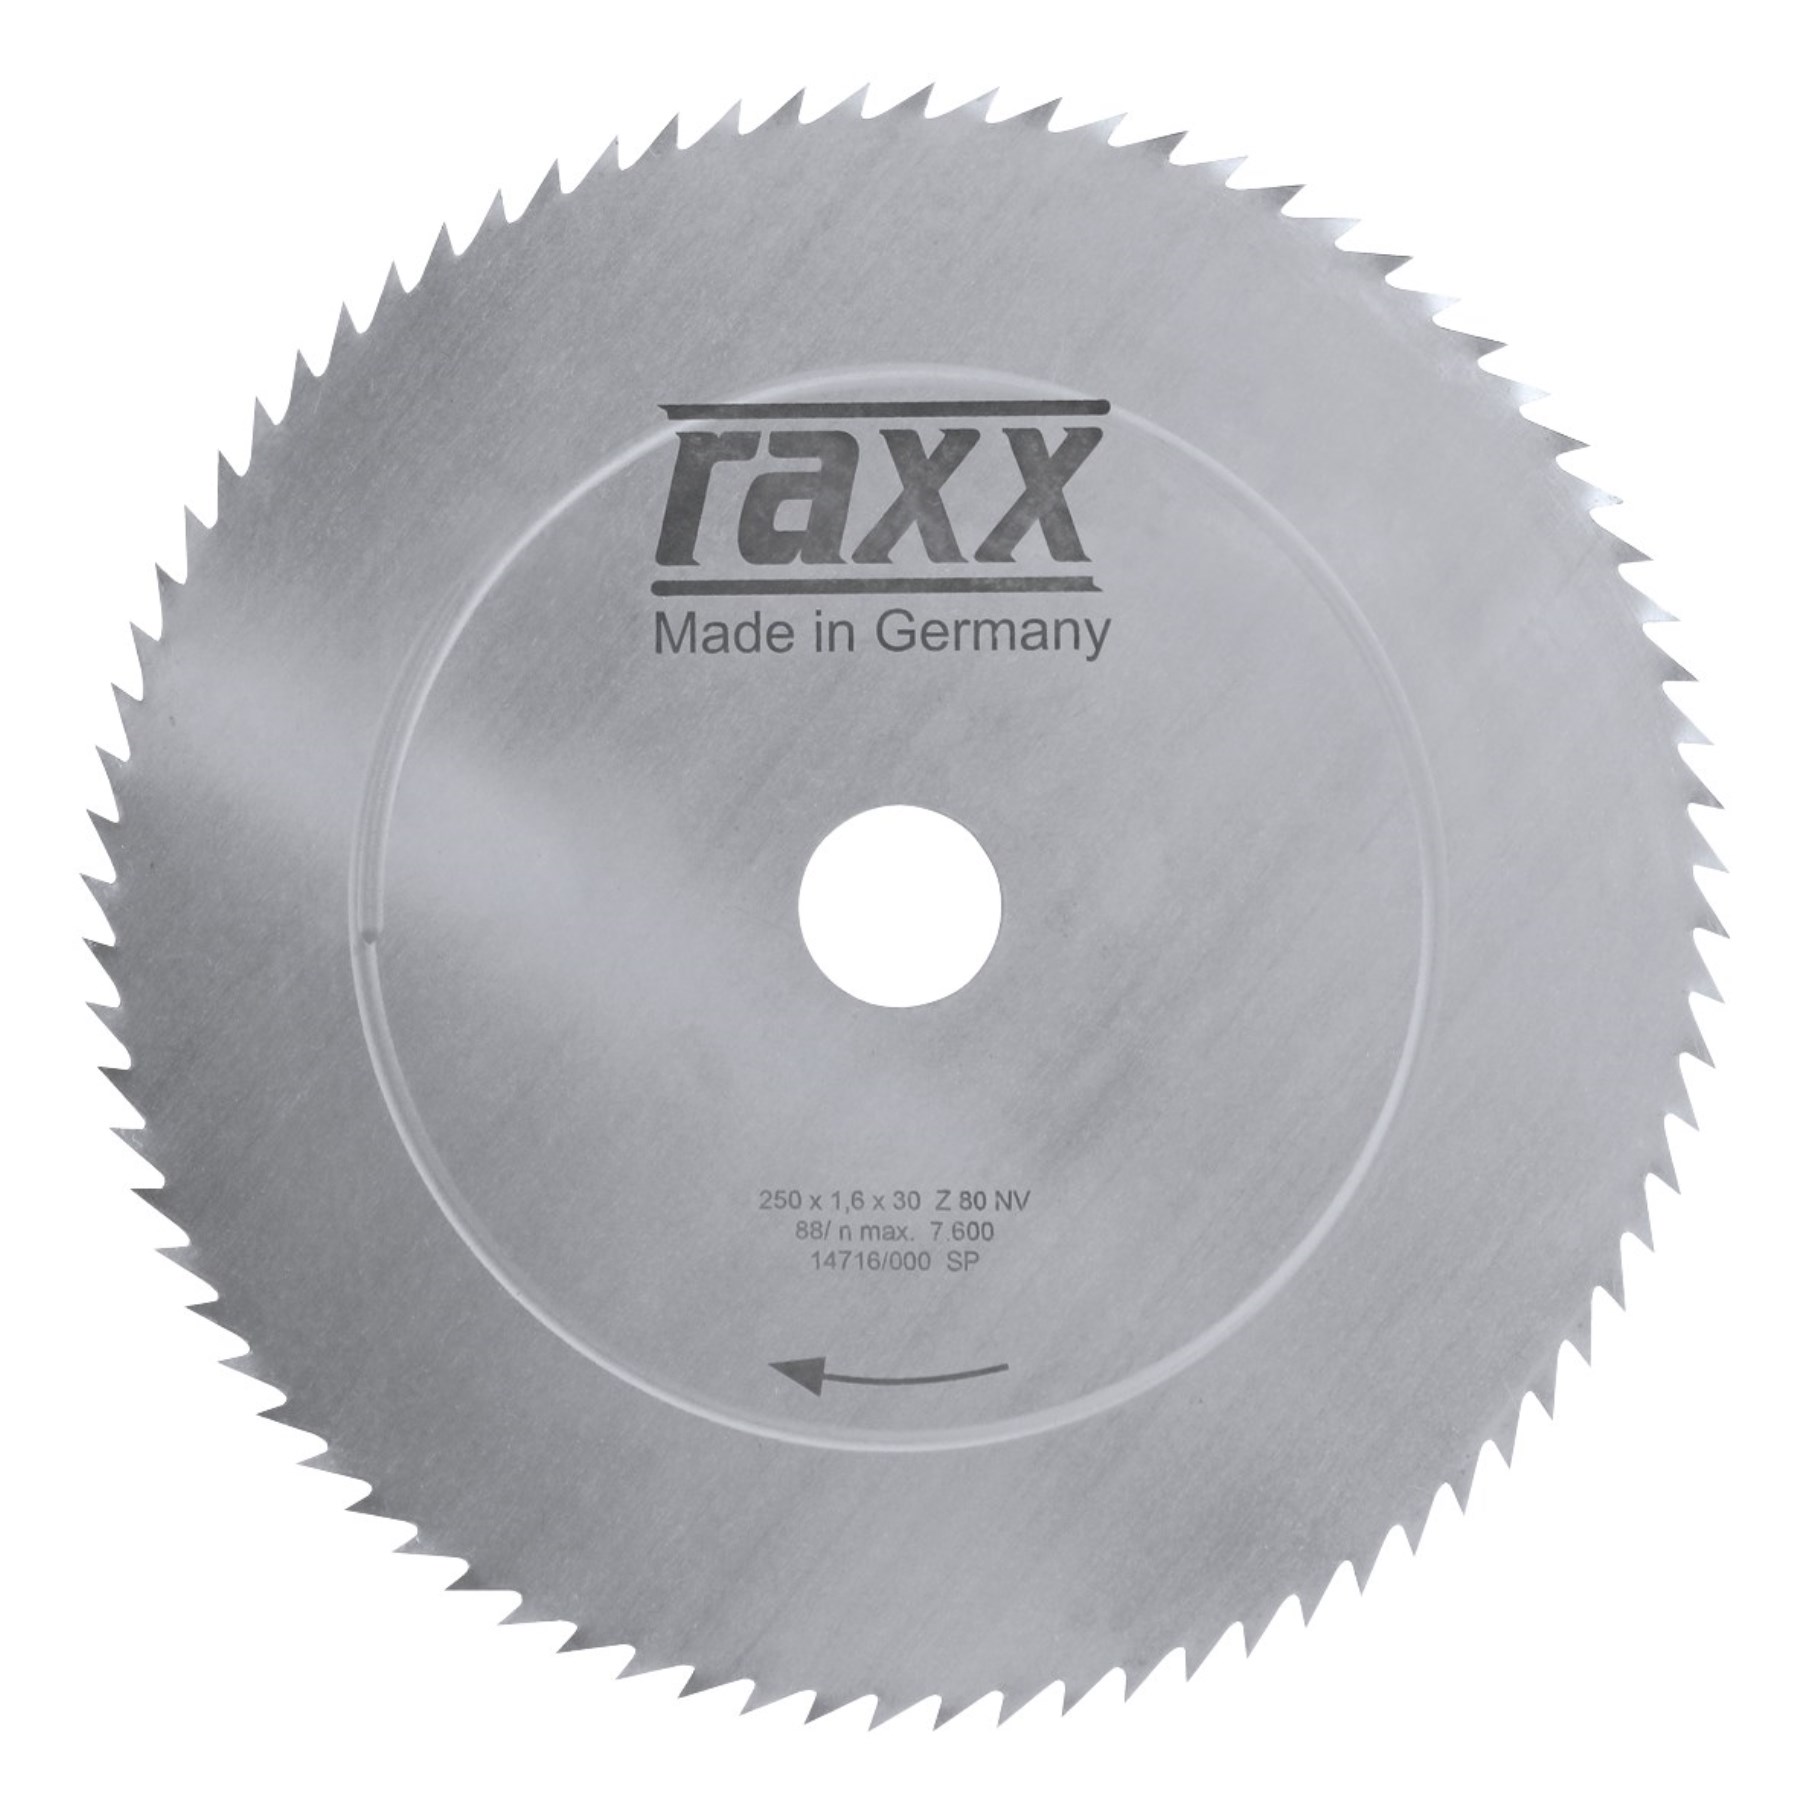 RAXX 1205038 kotouč k okružní pile 350x1,8x30 [ 7350300800060410 ]